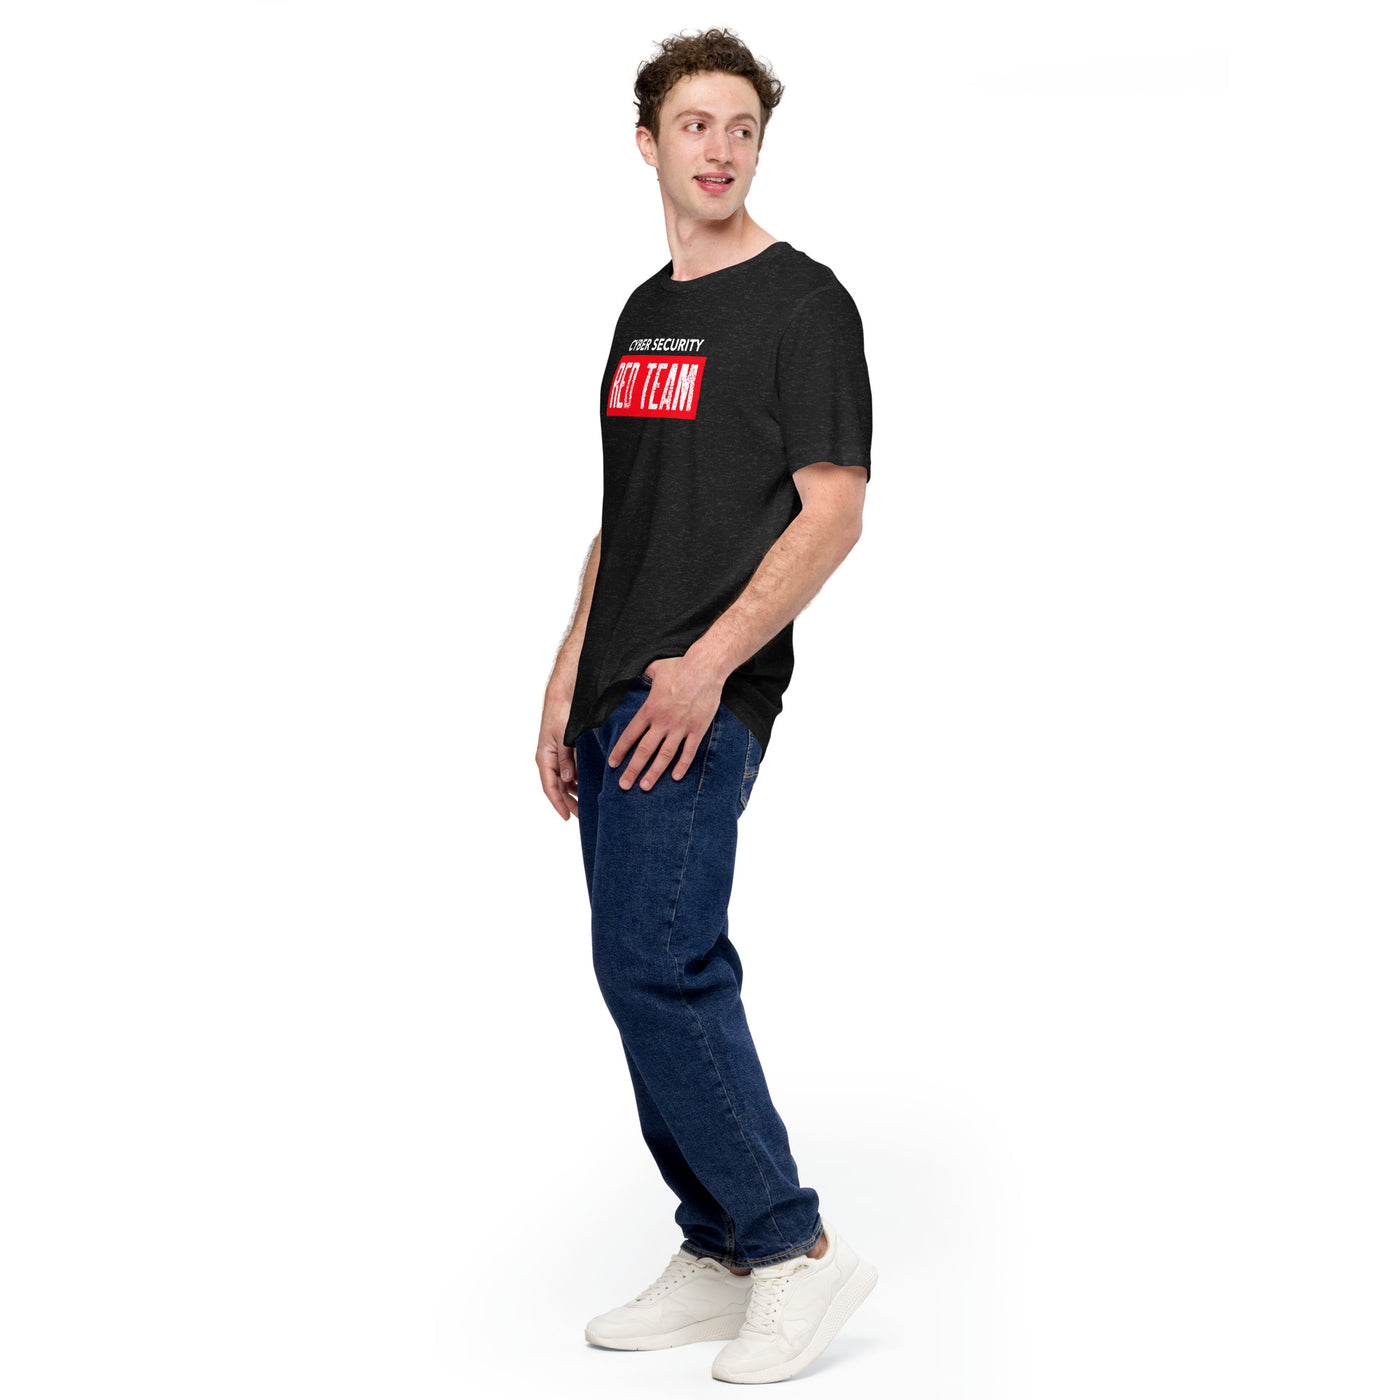 Cyber Security Red Team V1 - Short-Sleeve Unisex T-Shirt